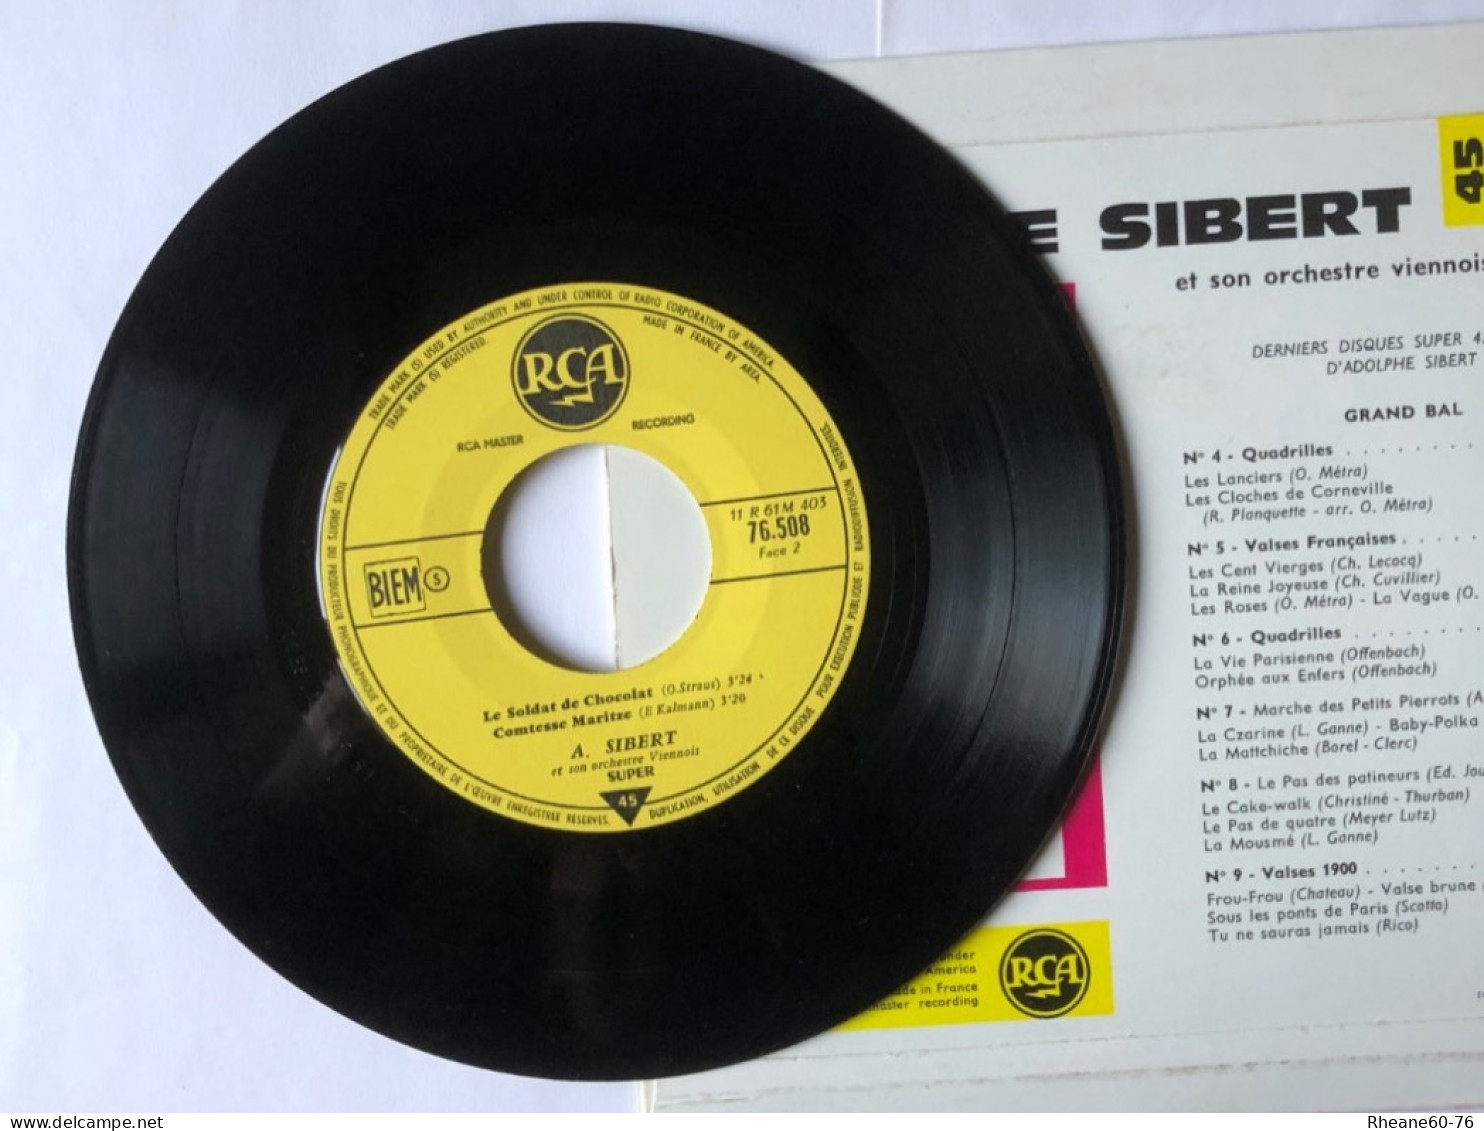 RCA 76508 Super 45T - Adolphe Sibert Et Son Orchestre Viennois - Formatos Especiales